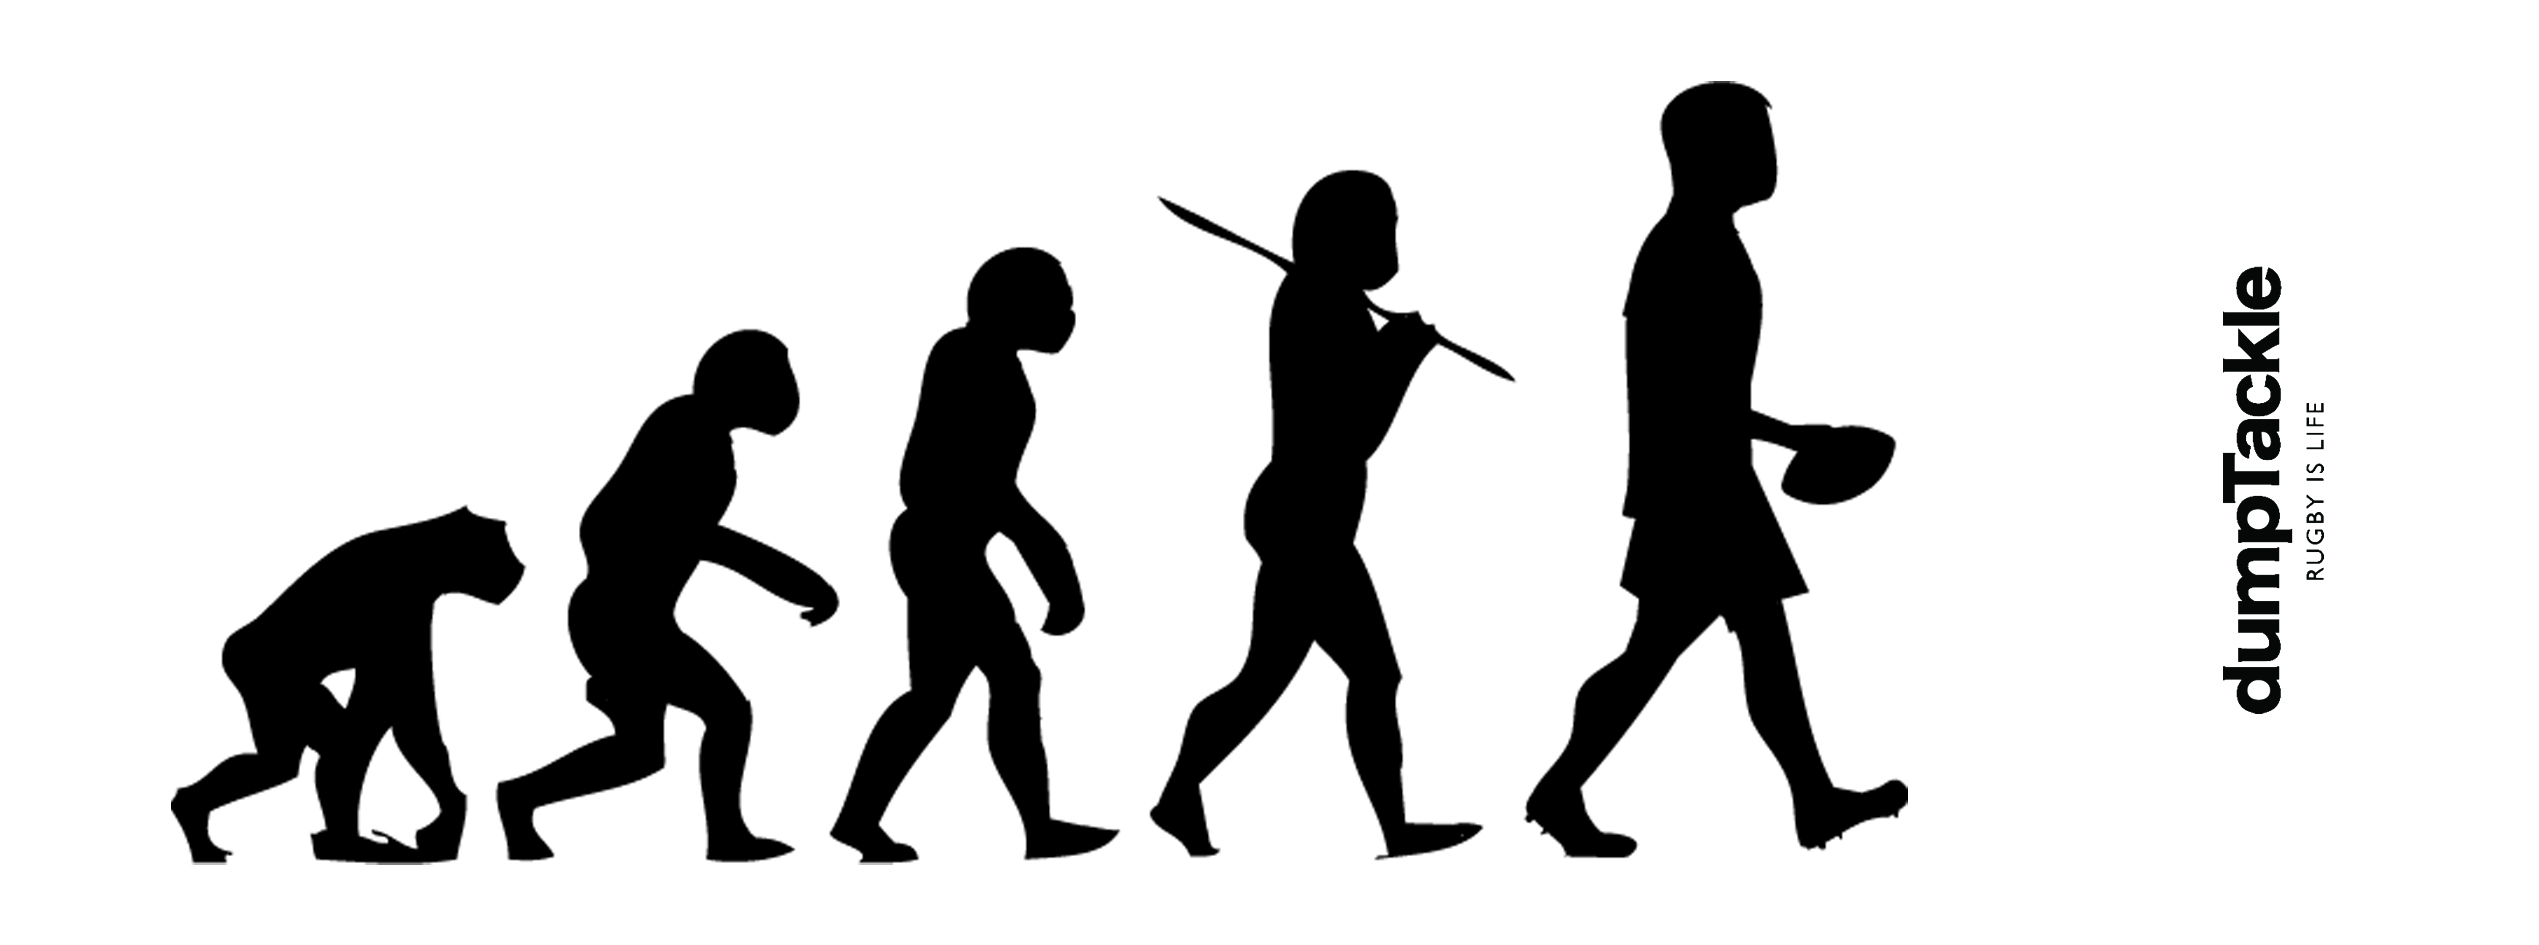 The evolution of man